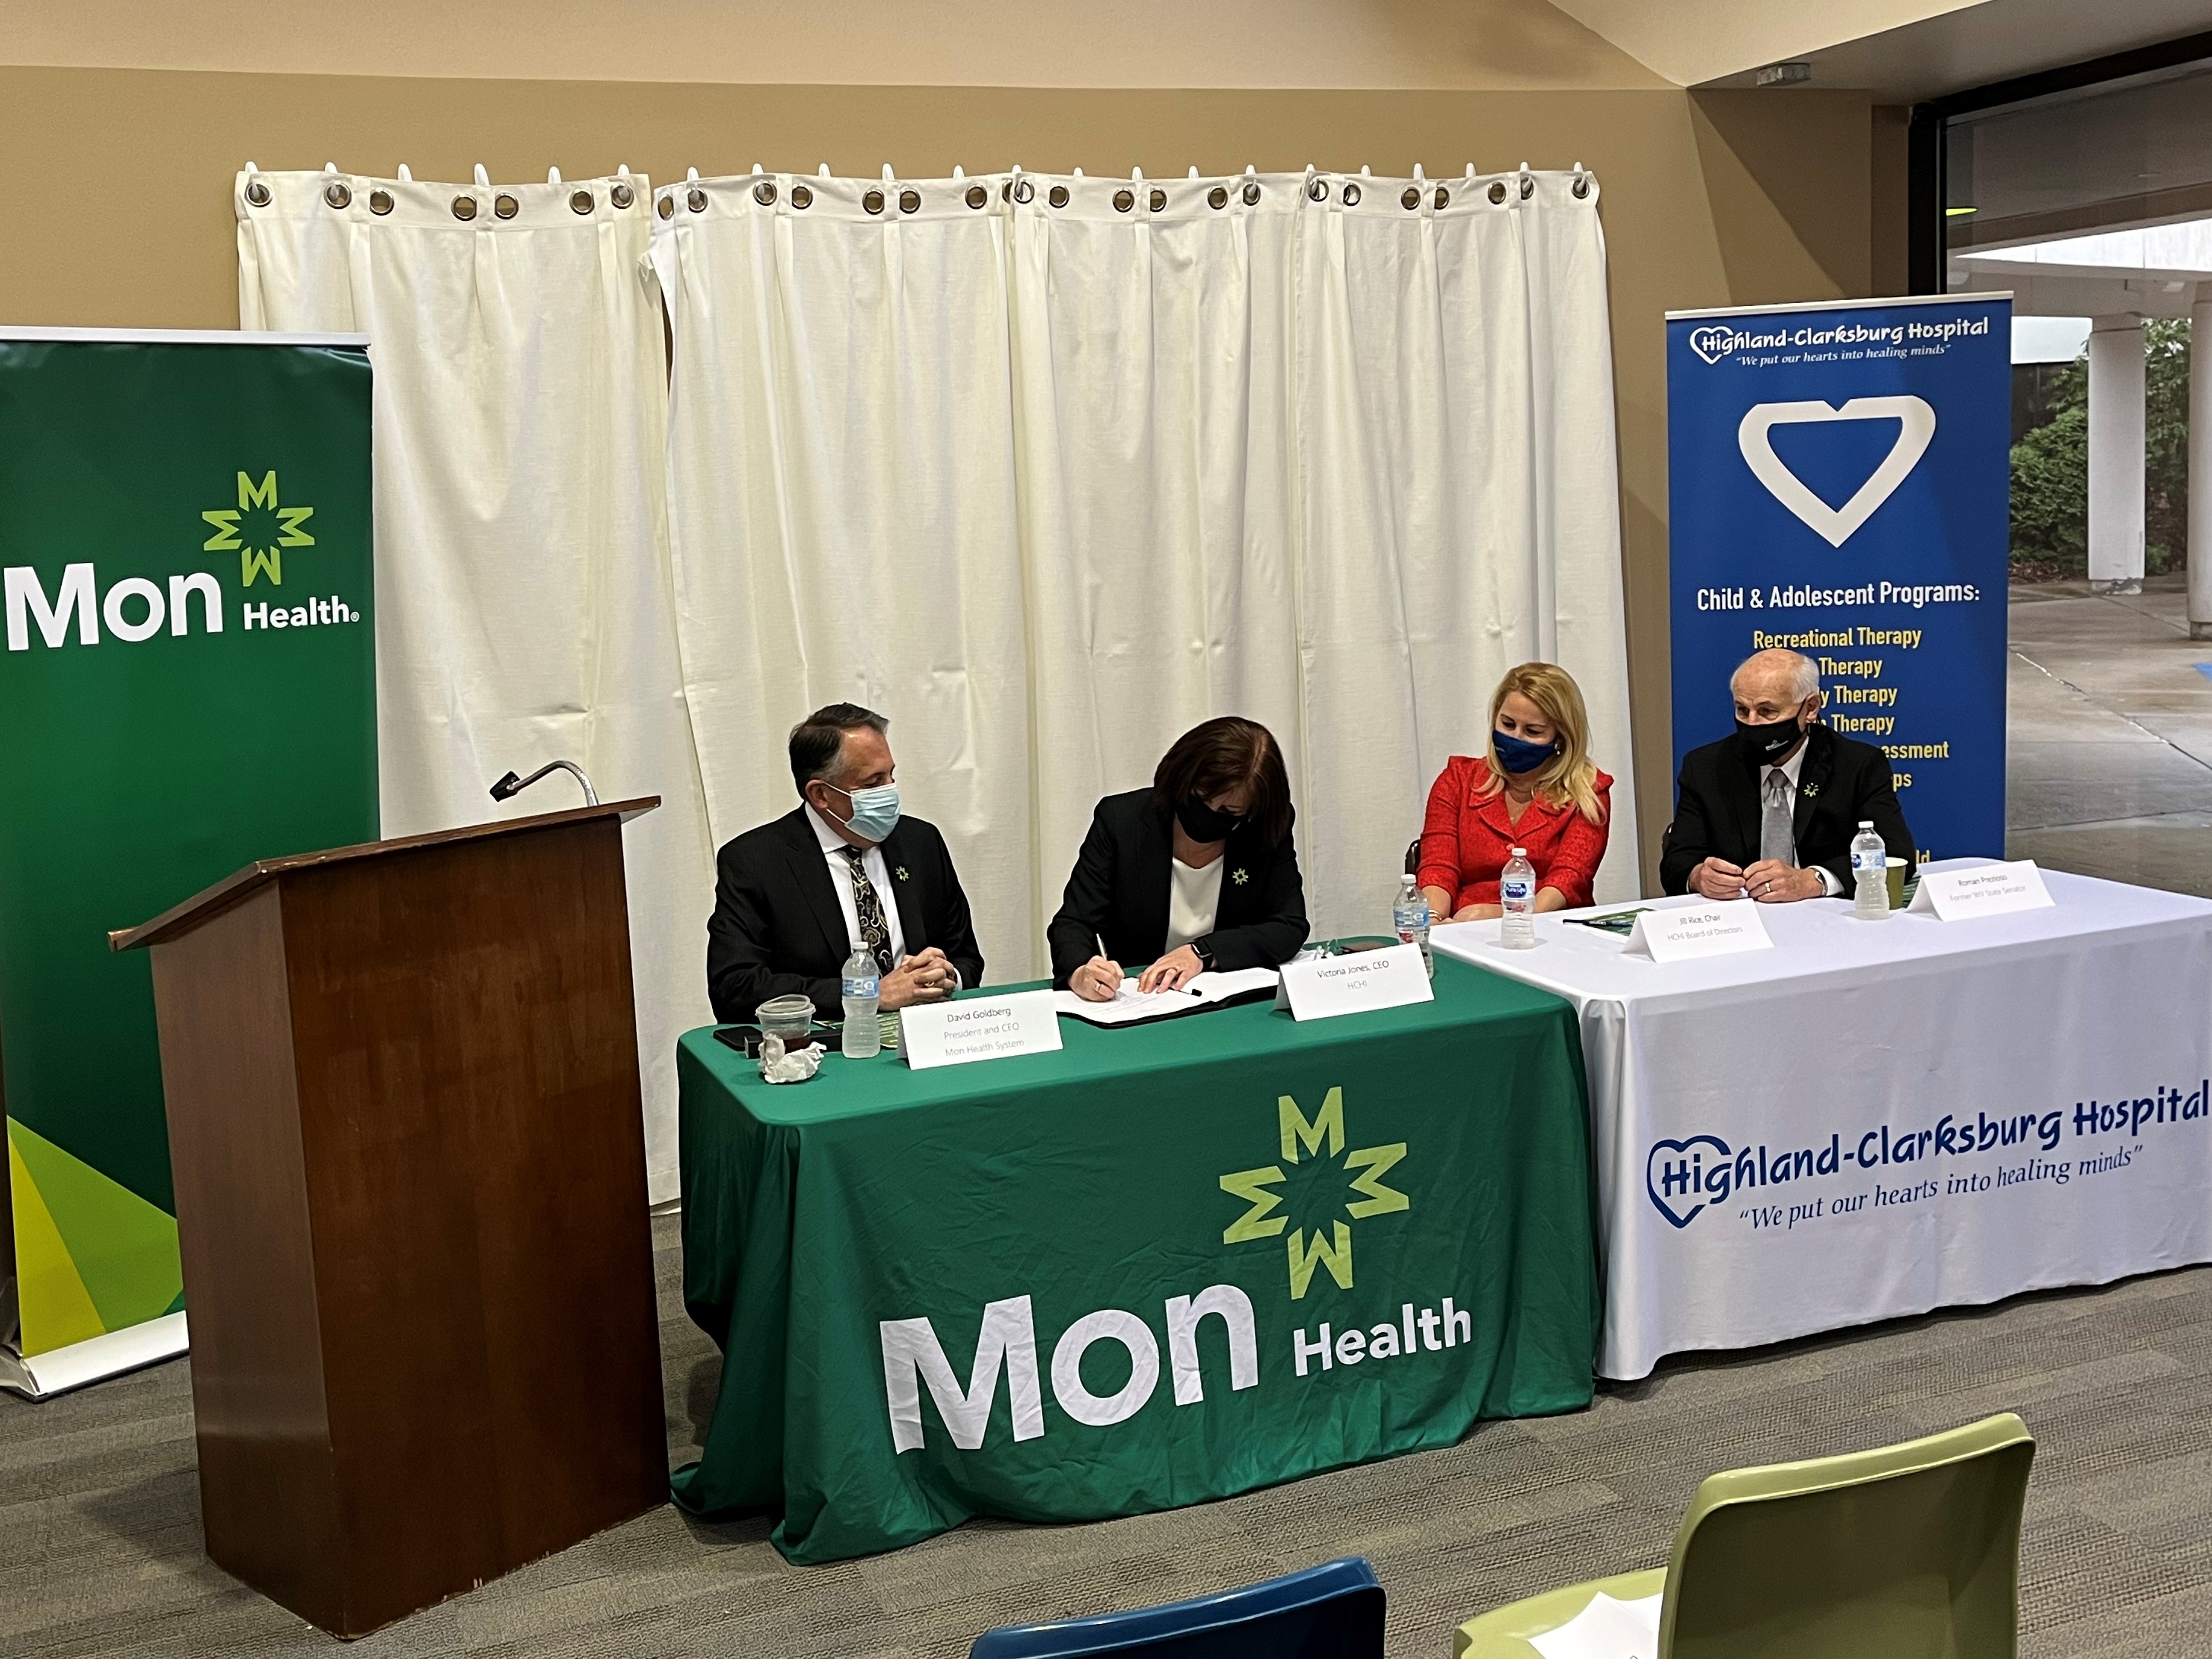 Mon Health and Highland-Clarksburg Hospital Enter Affiliation Agreement